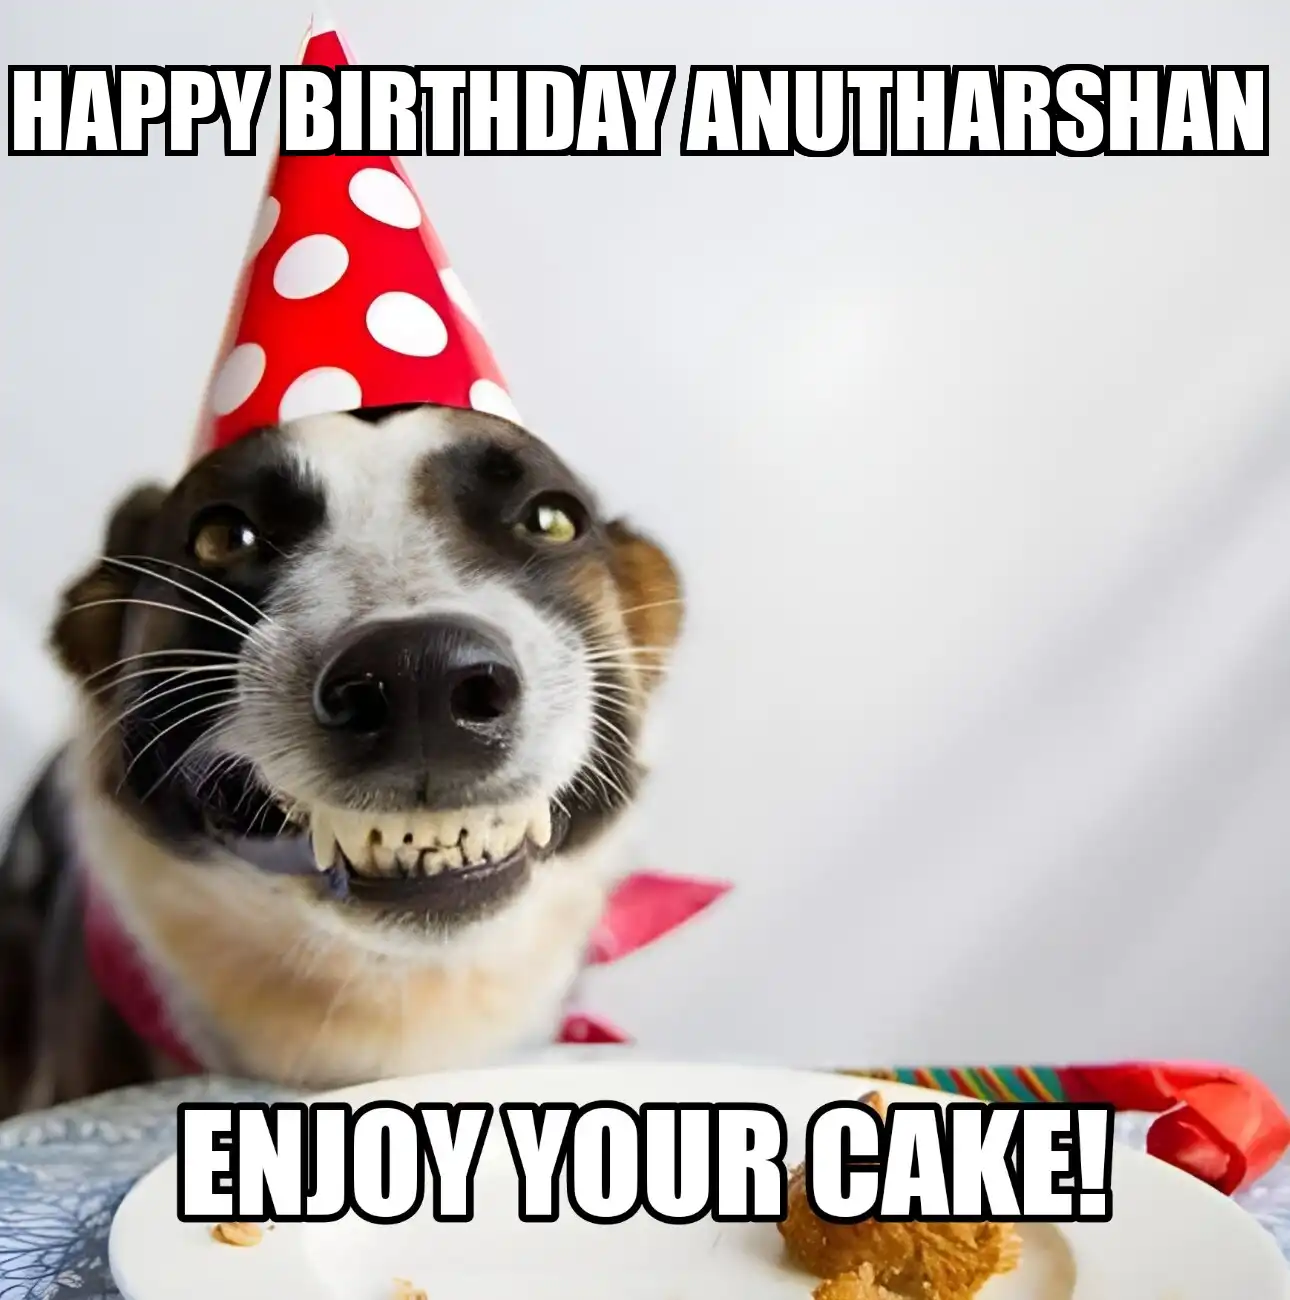 Happy Birthday Anutharshan Enjoy Your Cake Dog Meme